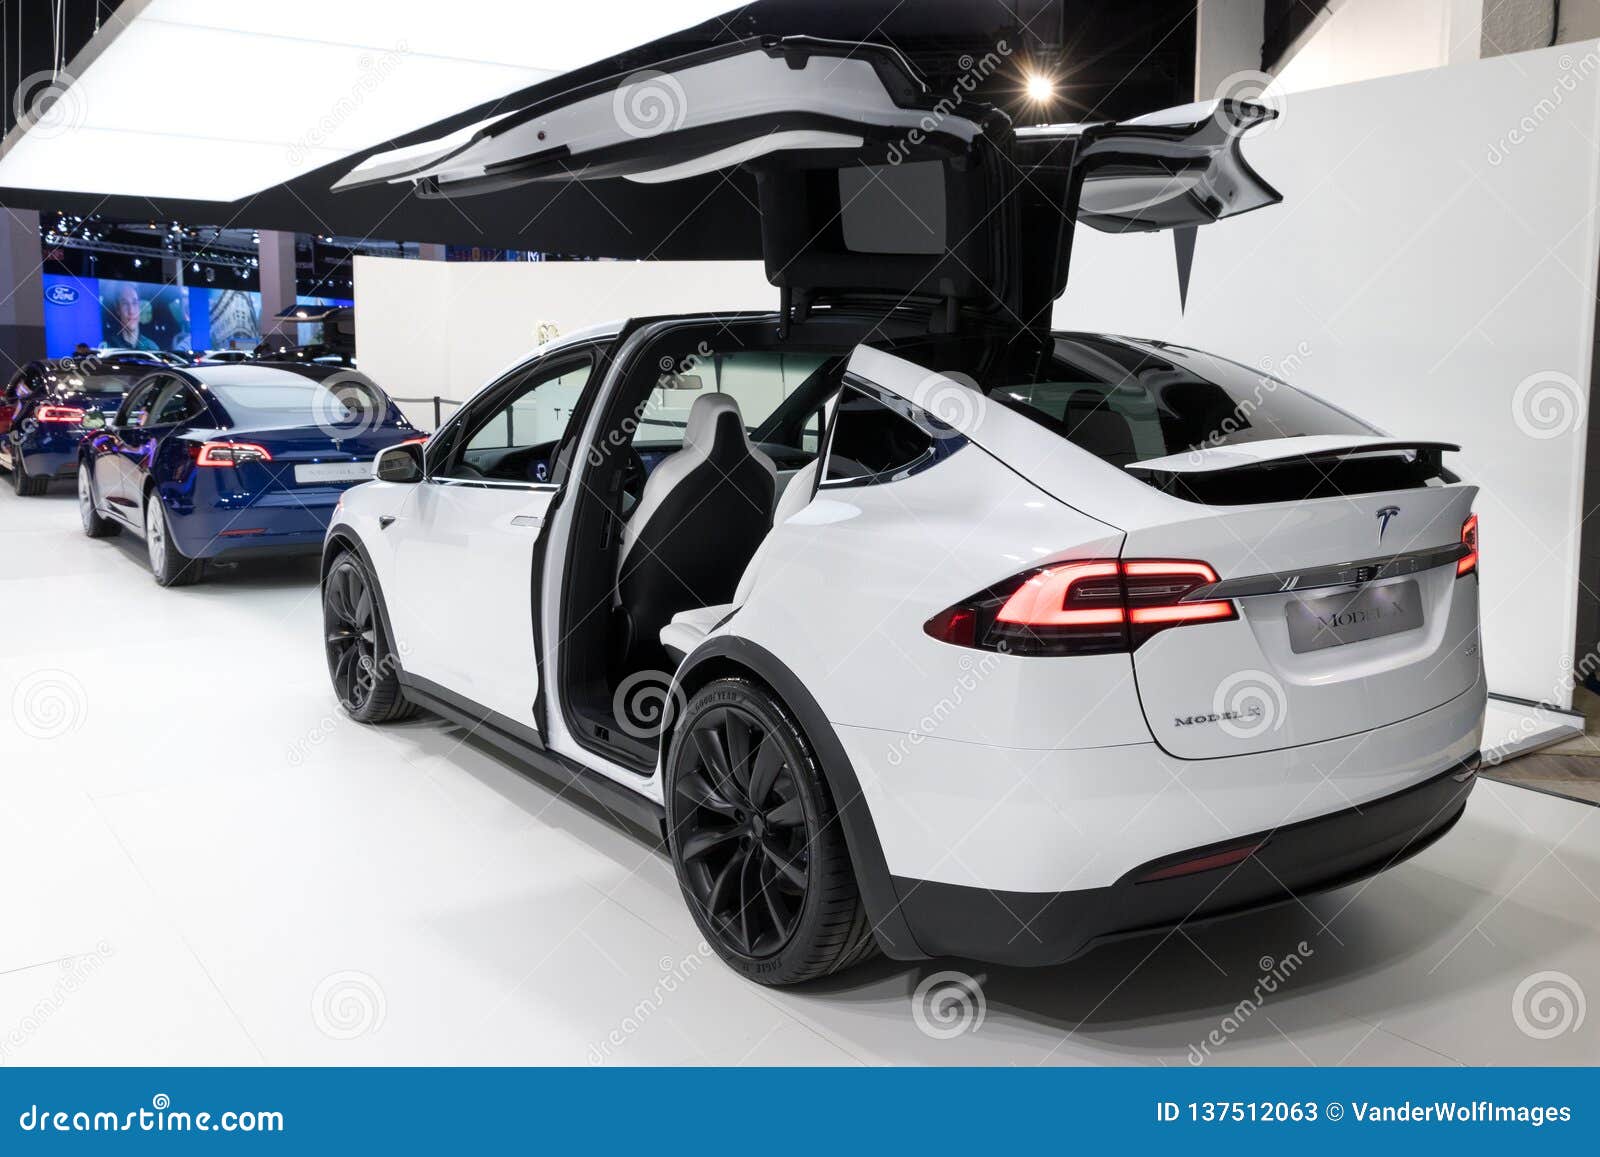 Tesla Model X Electric Luxury Suv Car Editorial Stock Photo - Image of auto, show: 137512063